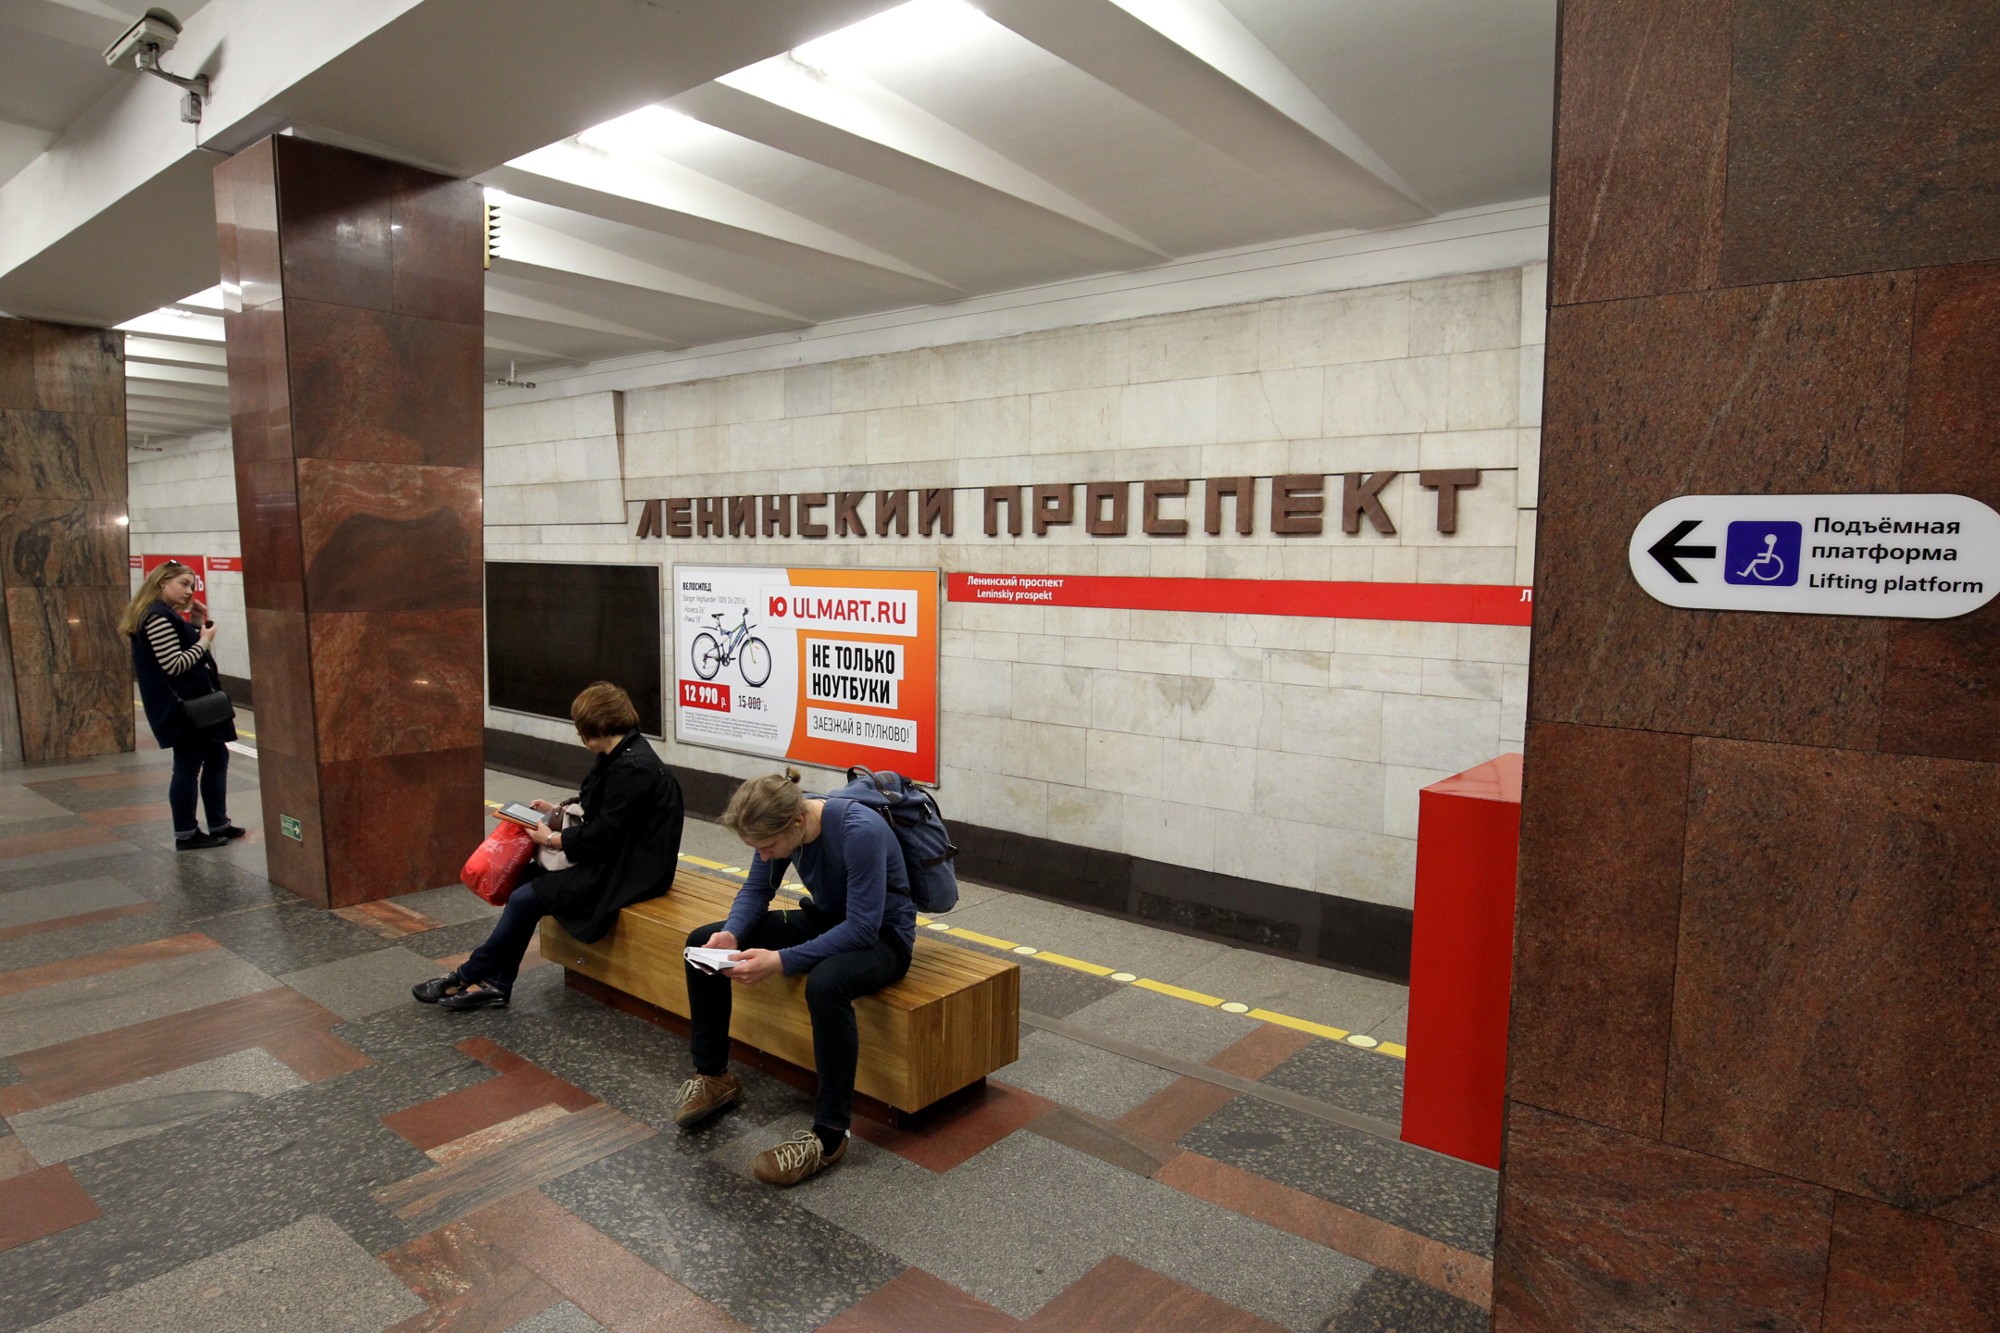 ст метро ленинский проспект